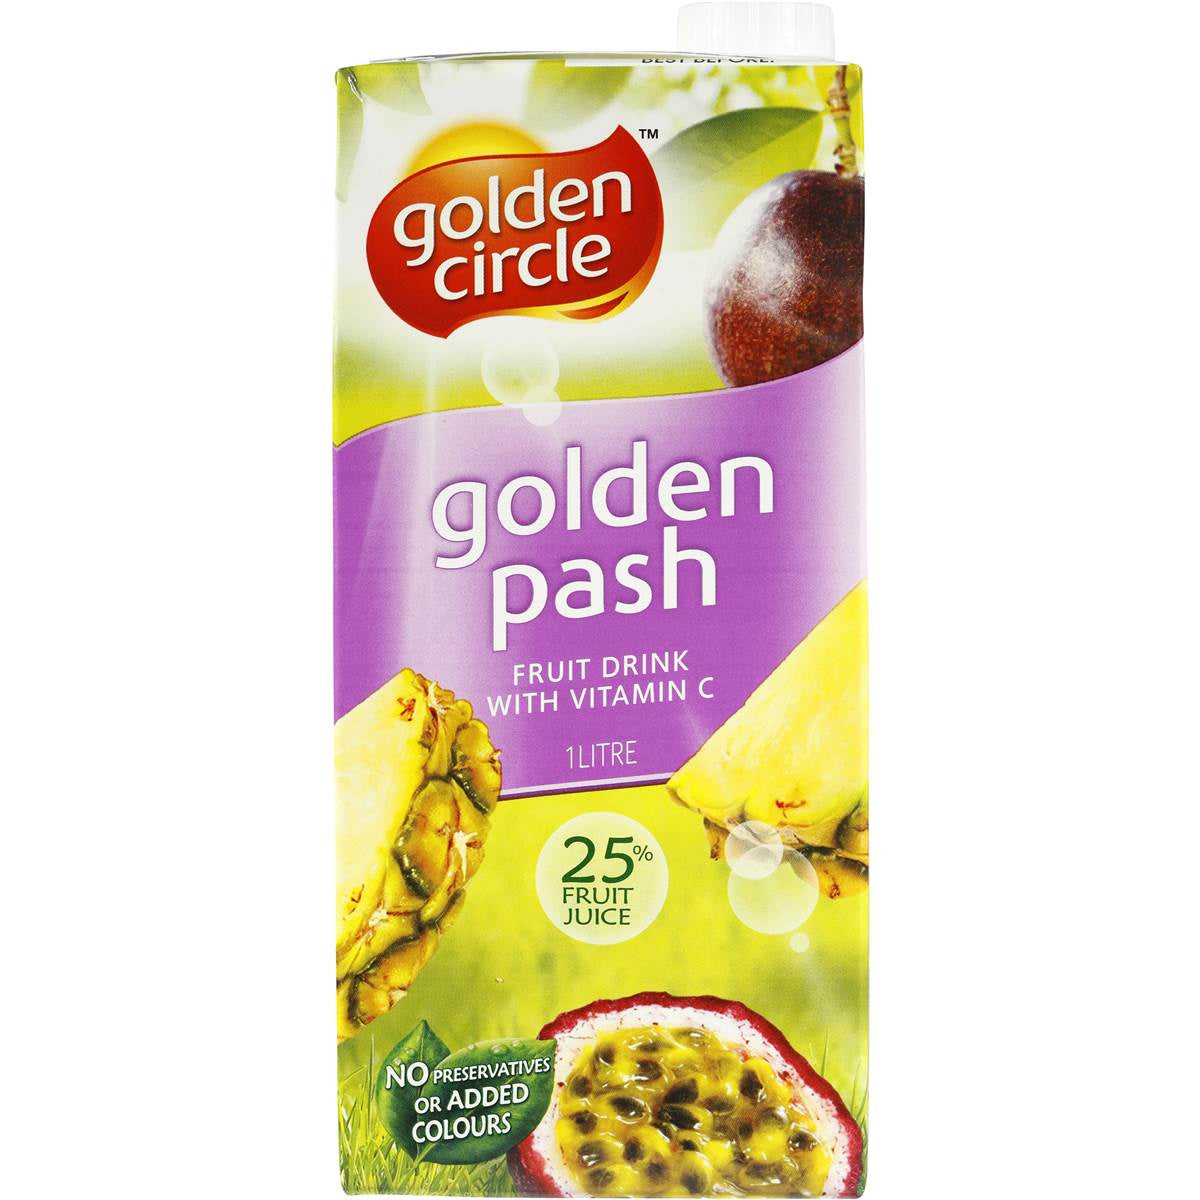 Golden Circle Fruit Drink Golden Pash 1L **